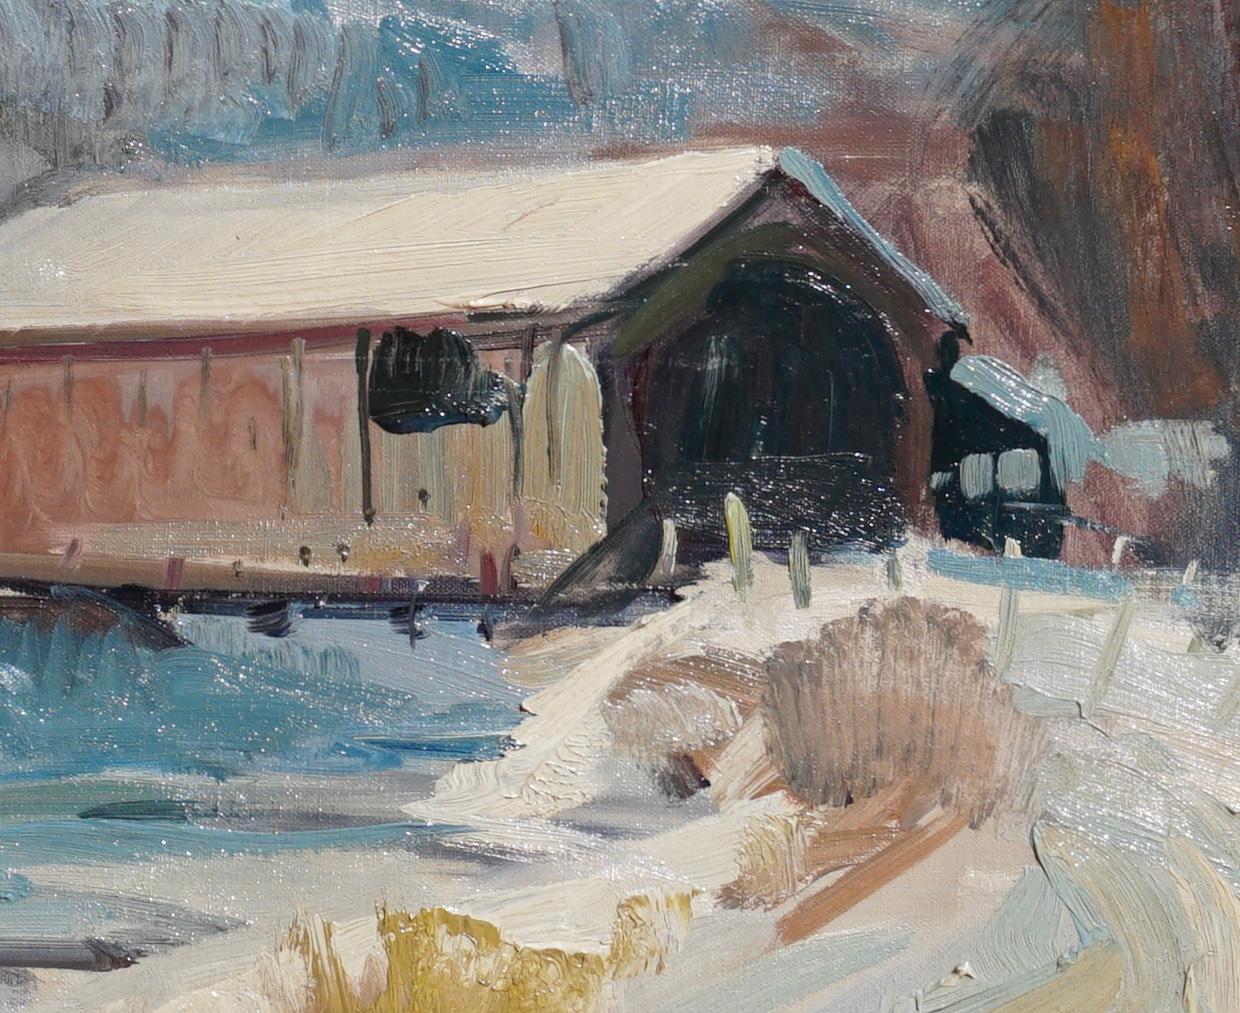 Adirondack Emile Albert Gruppe 'Mass 1896-1978' “Covered Bridge” Snow Painting